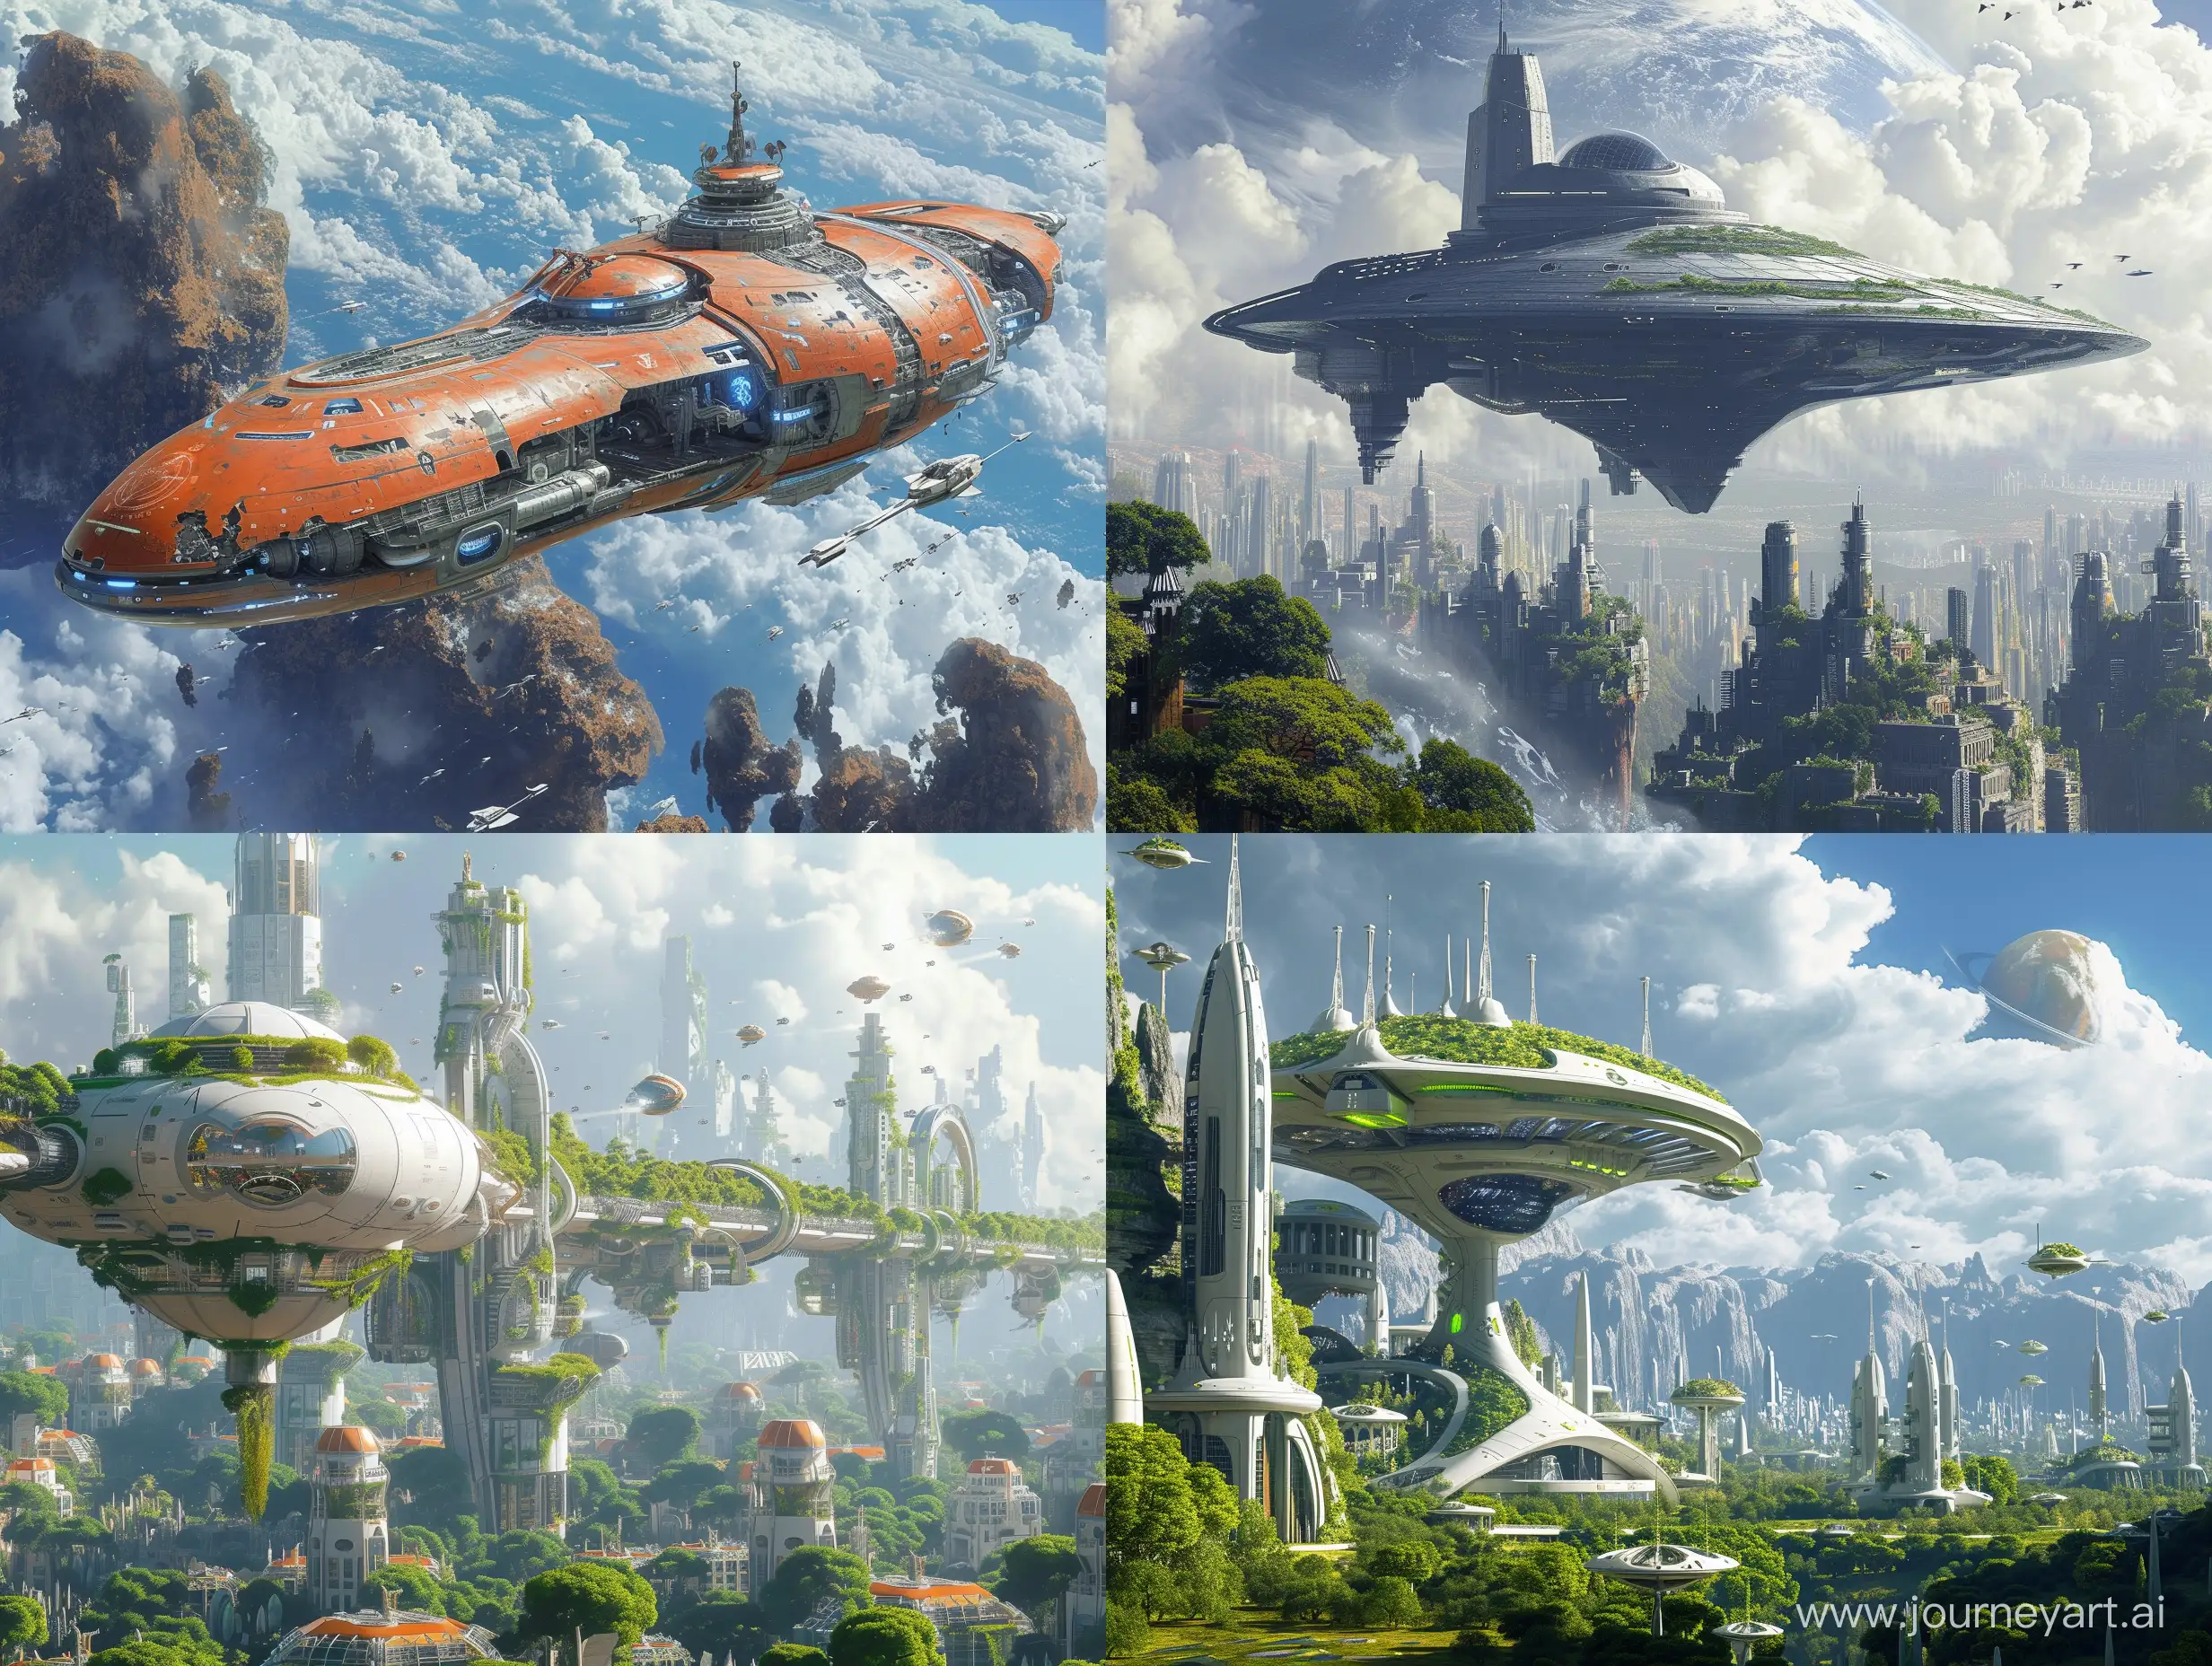 Legendary-BioUtopia-Spaceship-in-High-Resolution